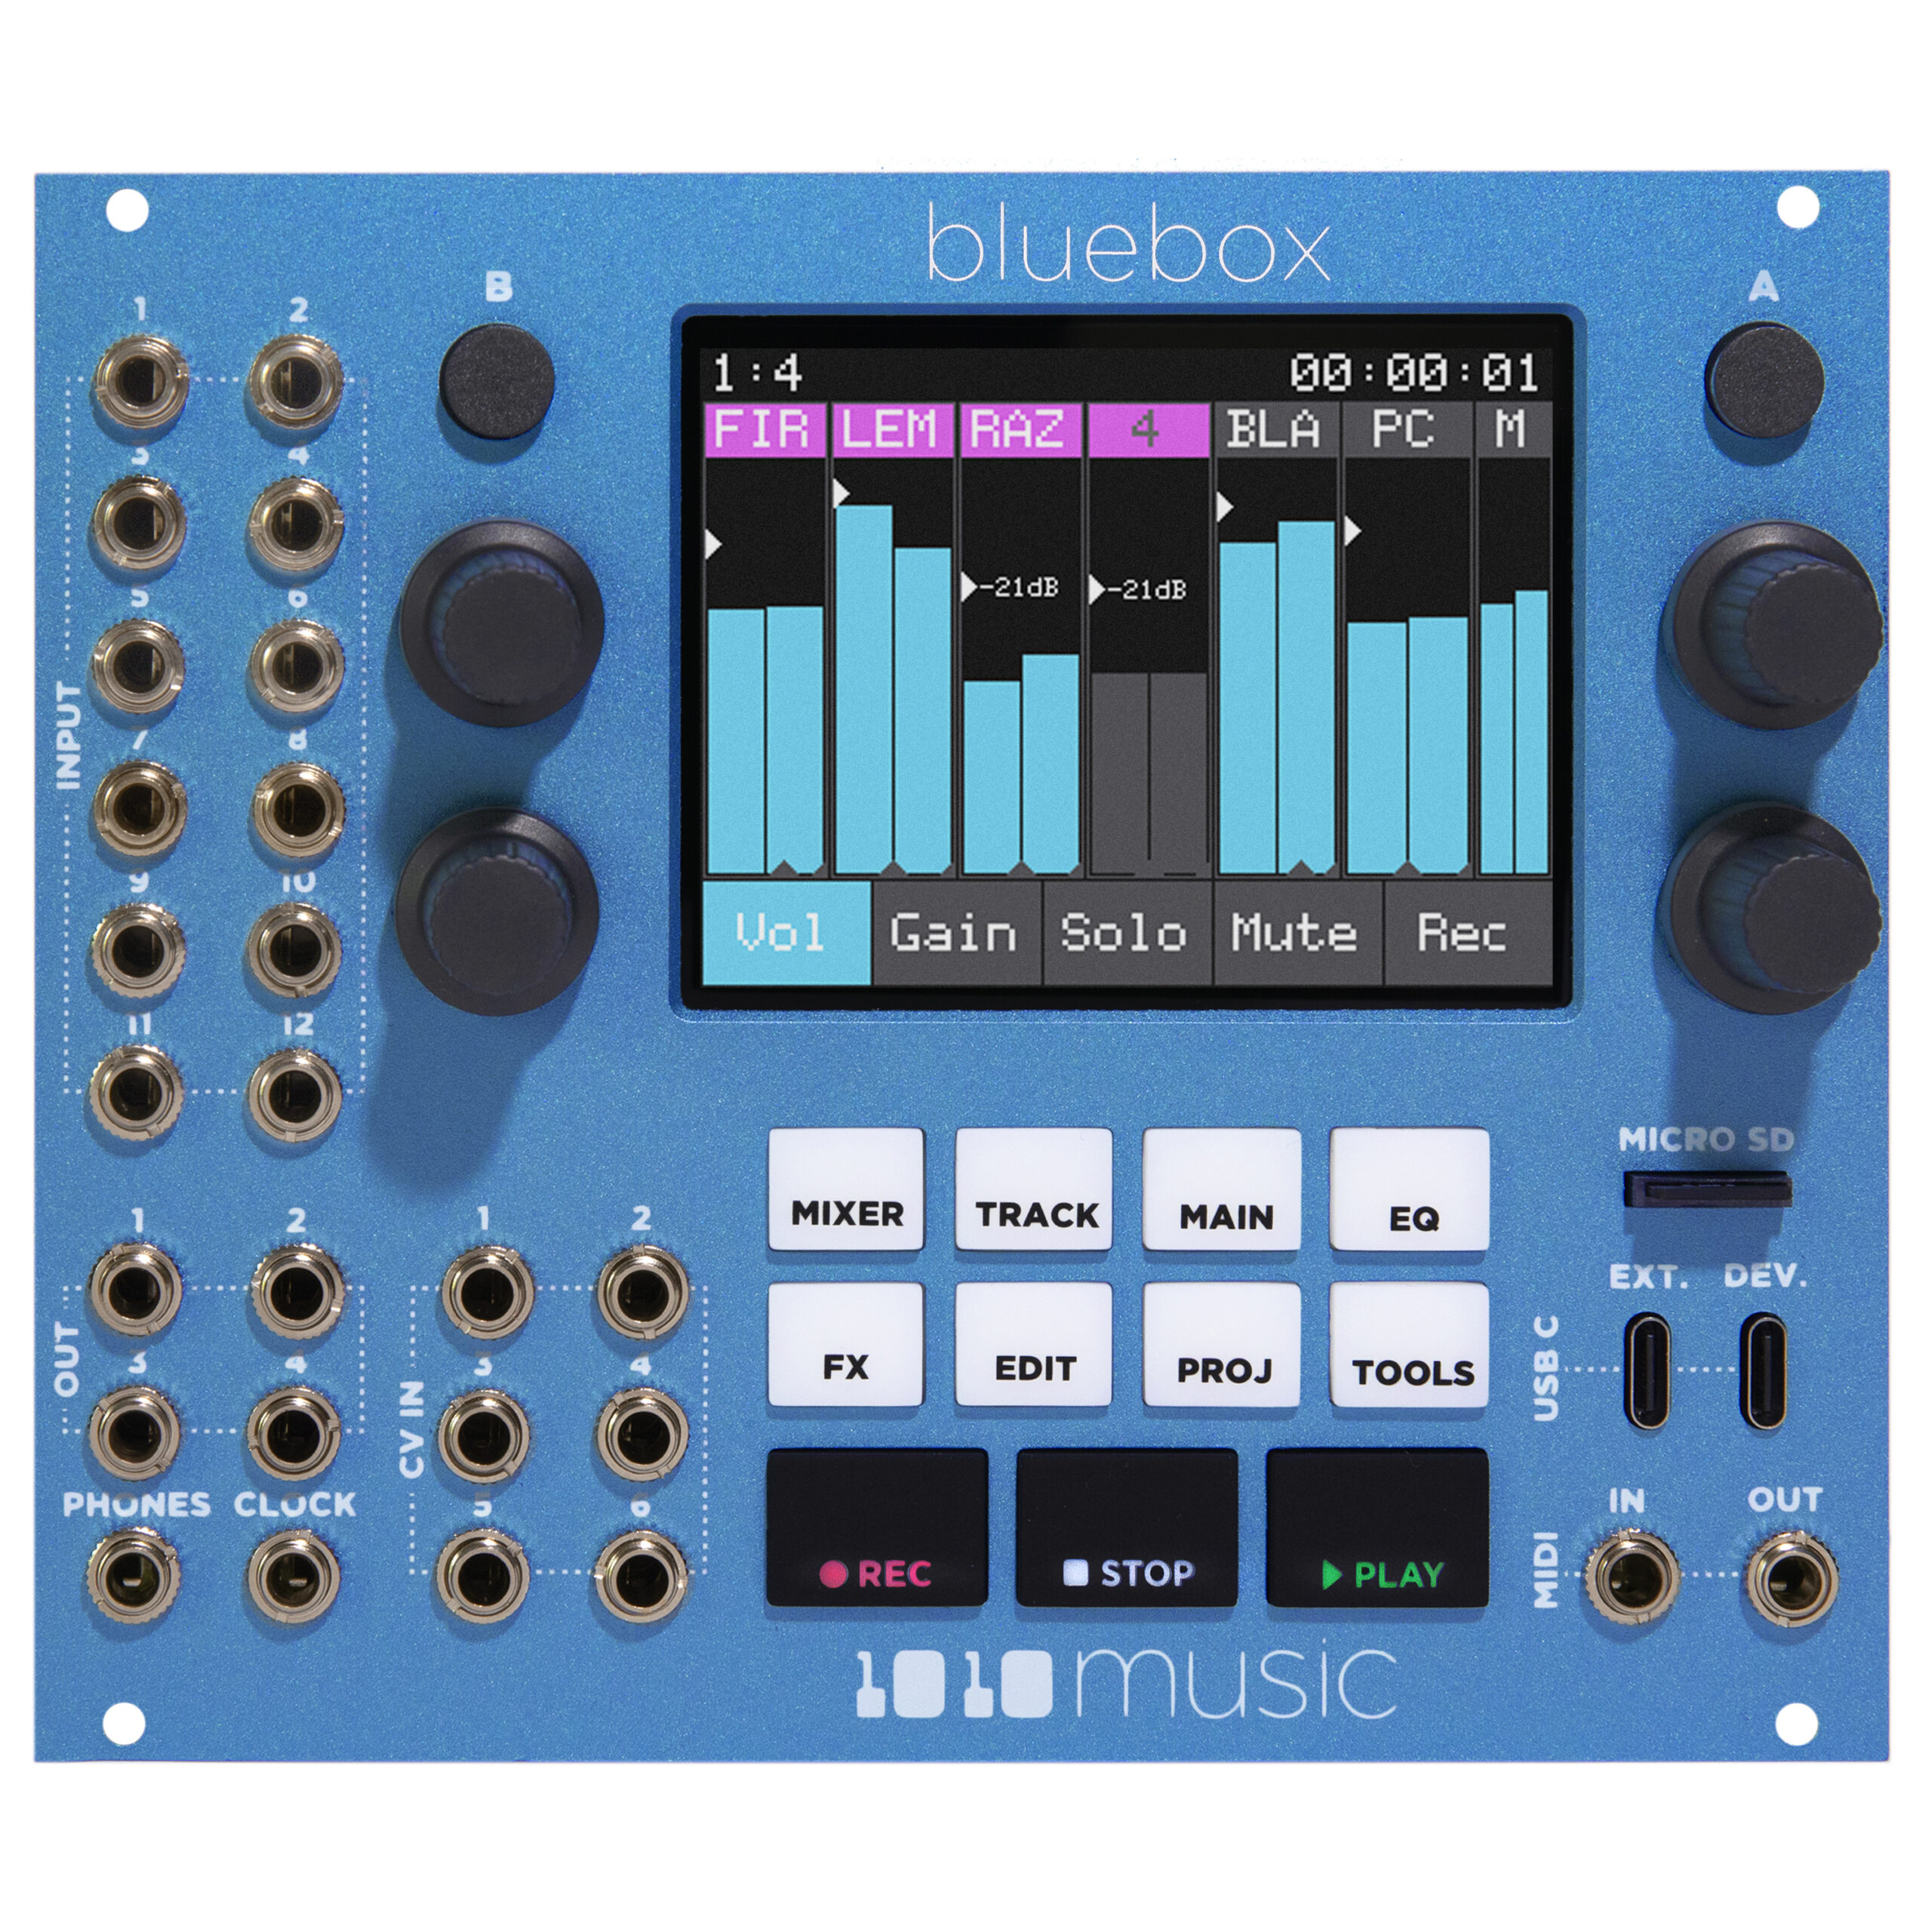 1010music Bluebox Compact Digital Mixer/Recorder (Eurorack Edition)